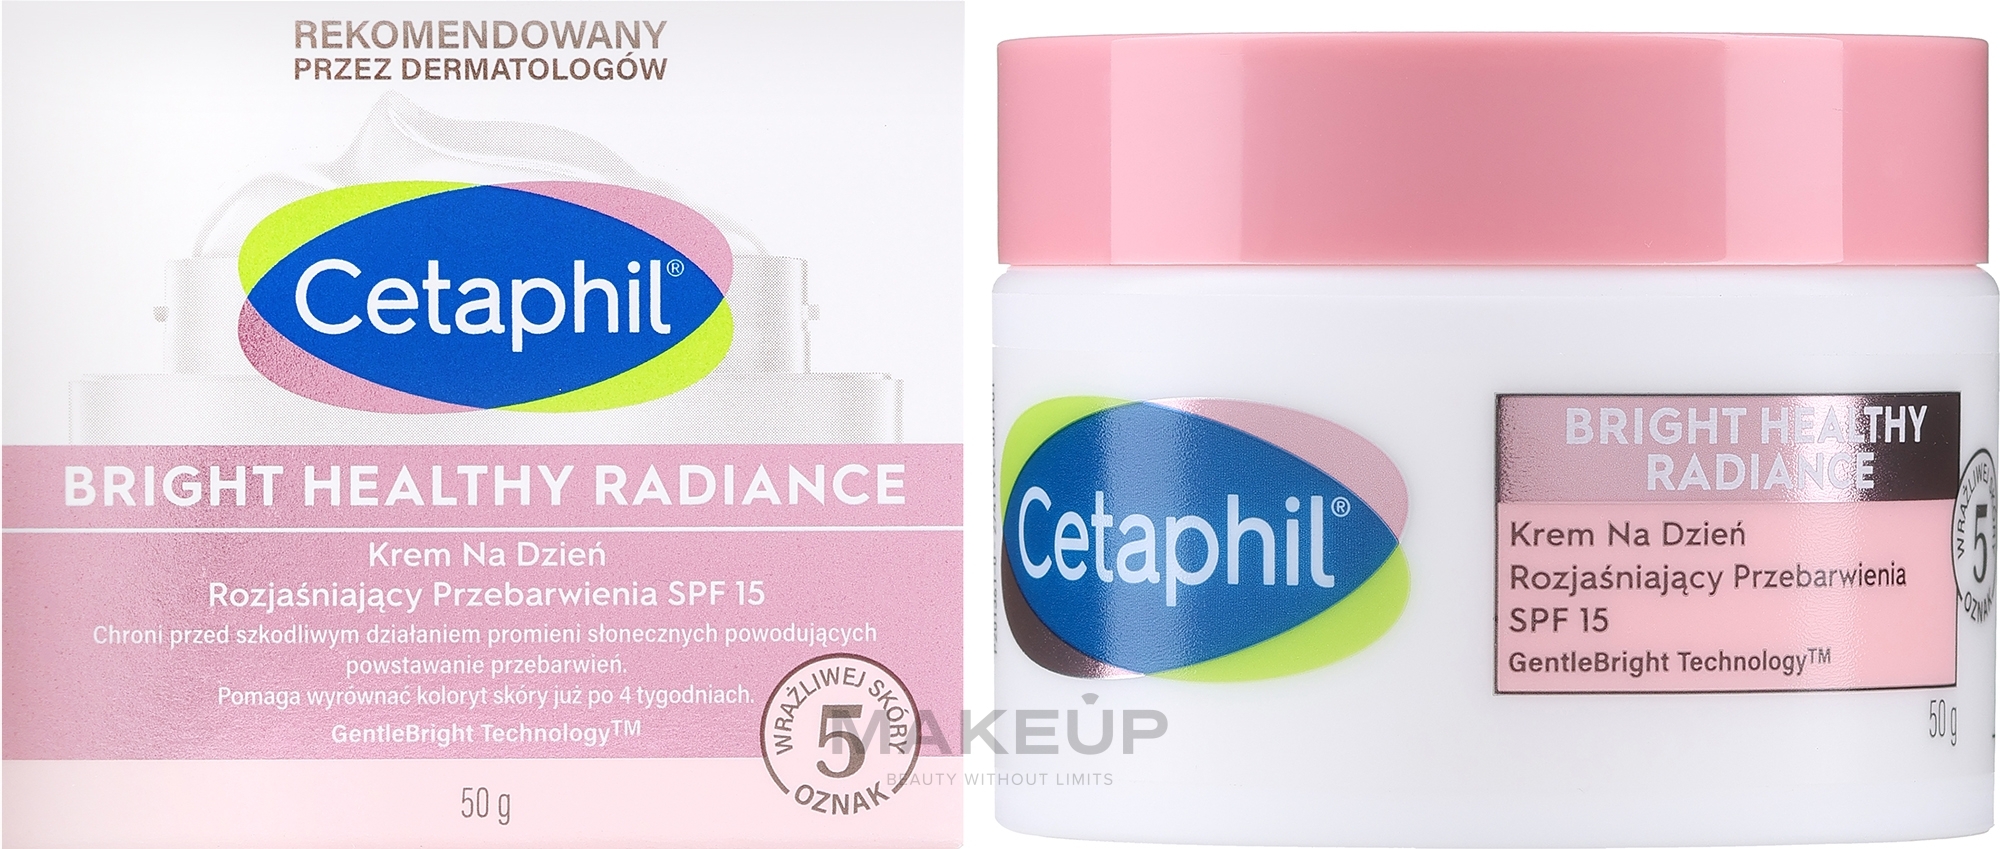 Освітлювальний денний крем для обличчя - Cetaphil Bright Healthy Radiance Face Day Cream SPF15 — фото 50g